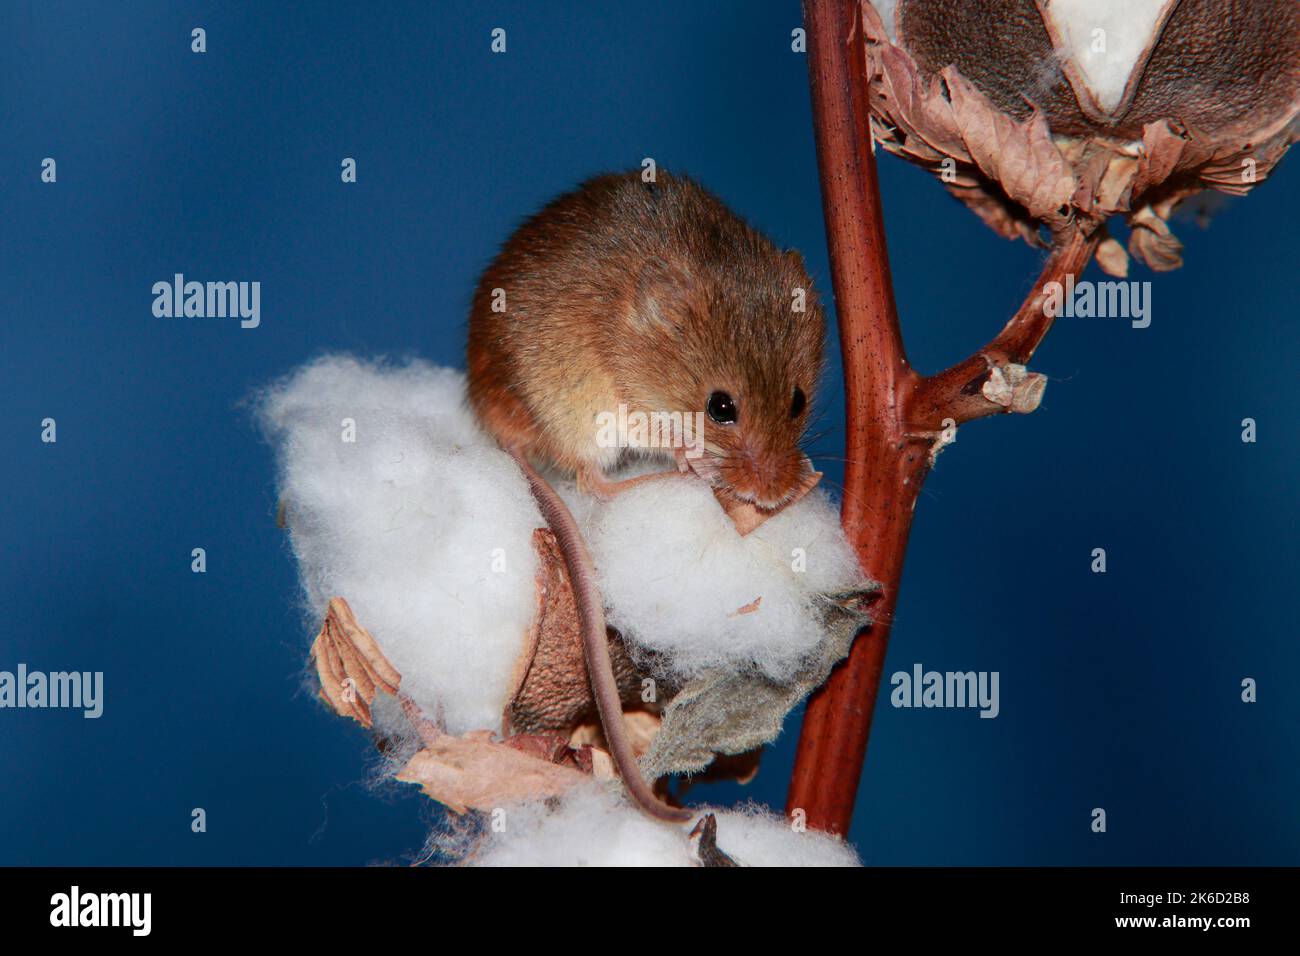 Harvest mice on twig Stock Photo